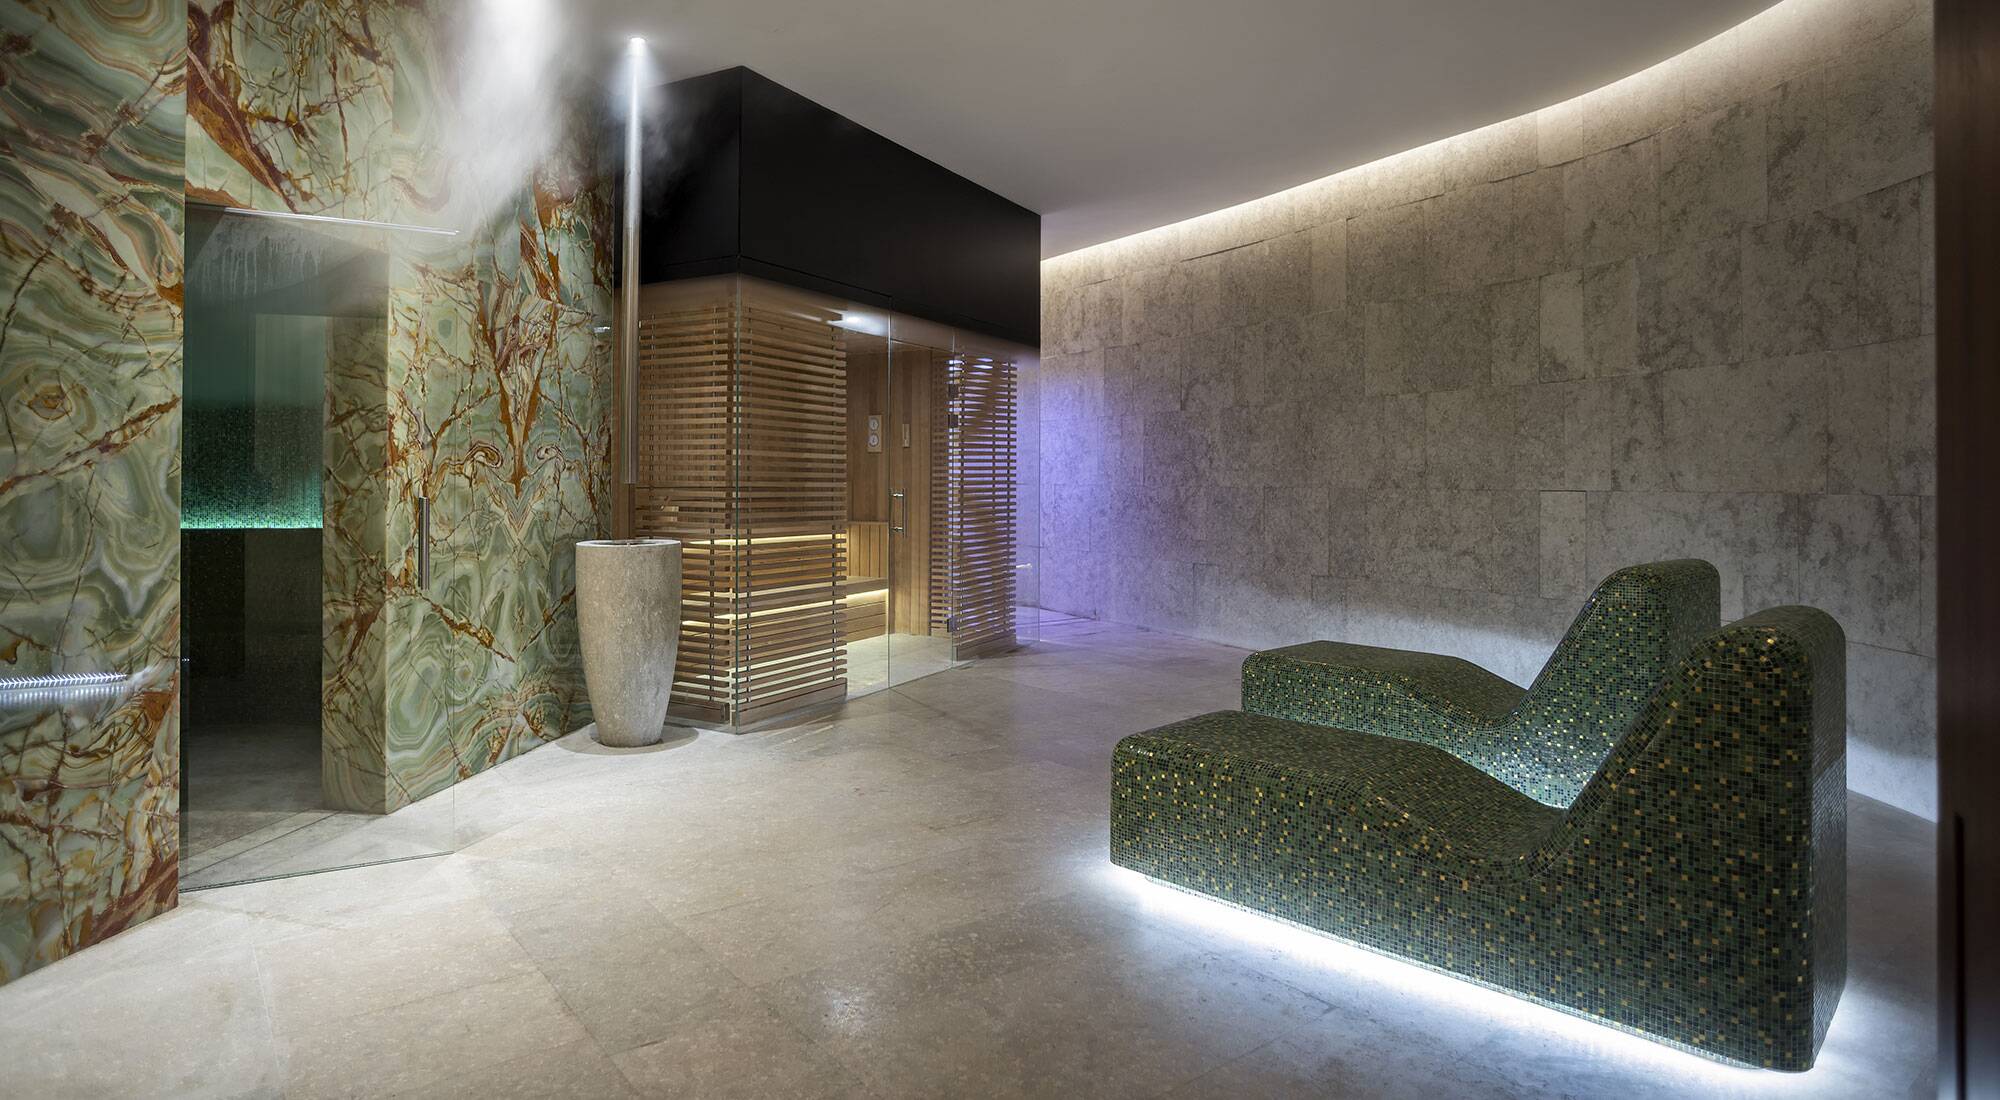 Bulgari luxury hotel collection grows 